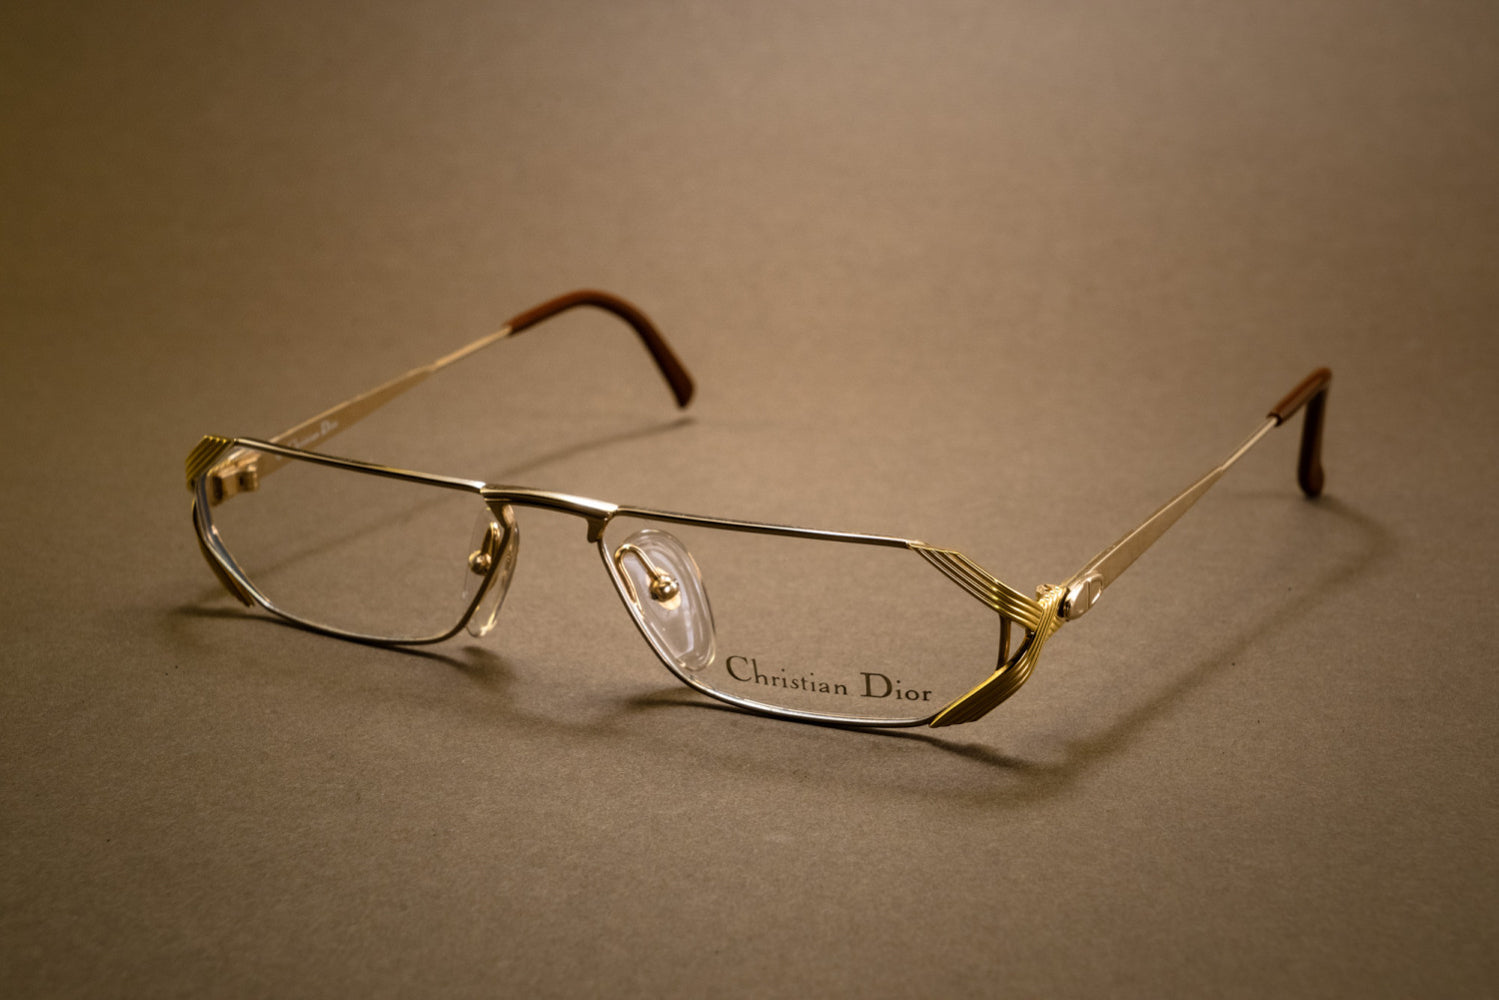 Christian Dior 2617 glasses